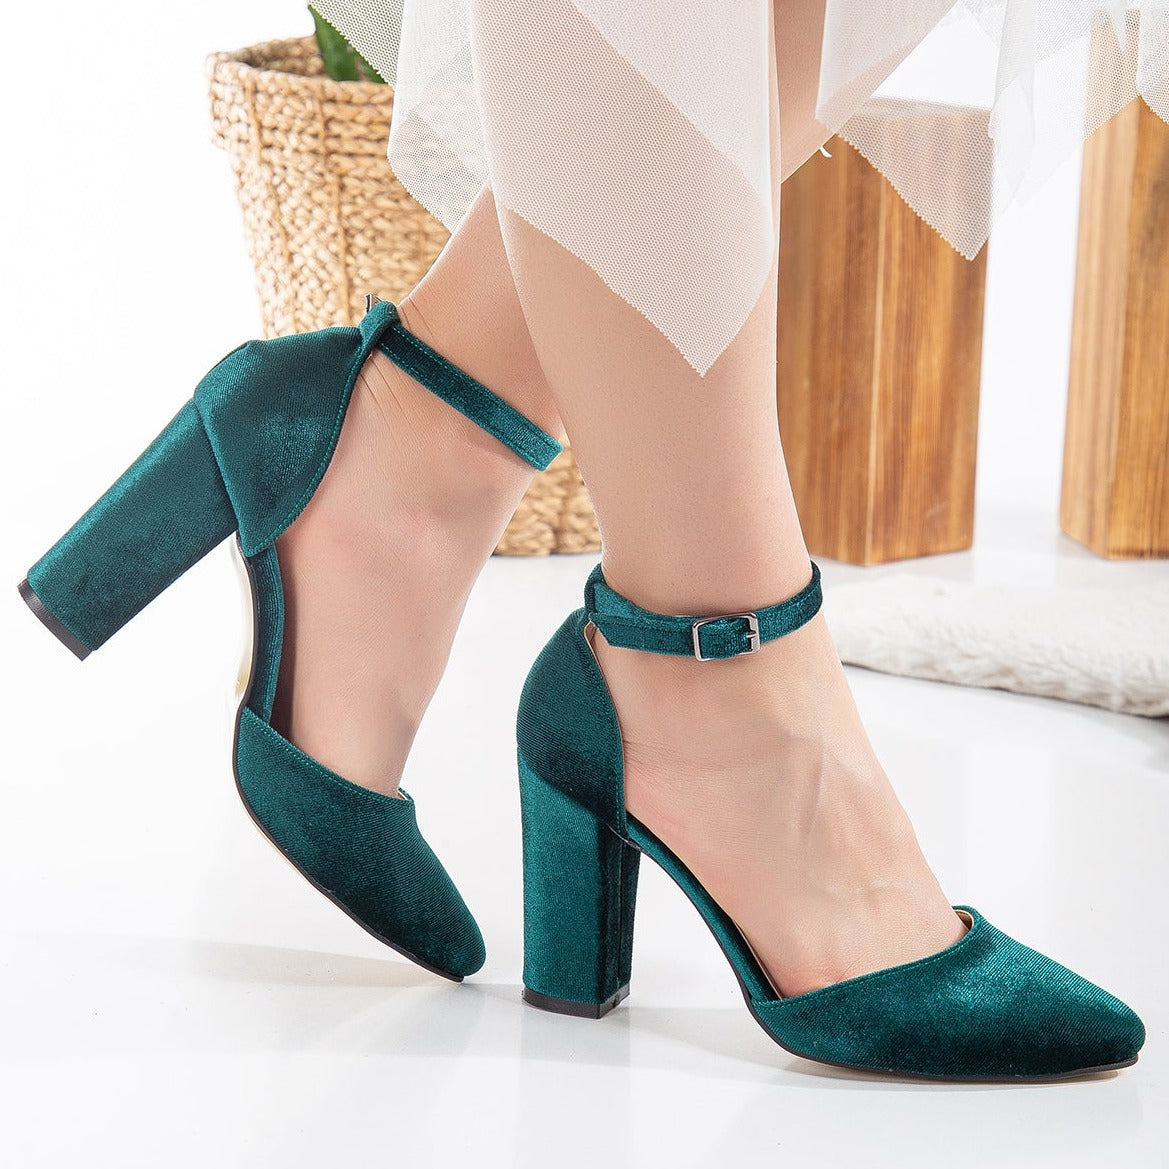 green velvet high heels, pearl ankle detail, women's shoes, elegant heels, luxury footwear, special occasion shoes, stylish high heels, fashion shoes, evening shoes, party shoes